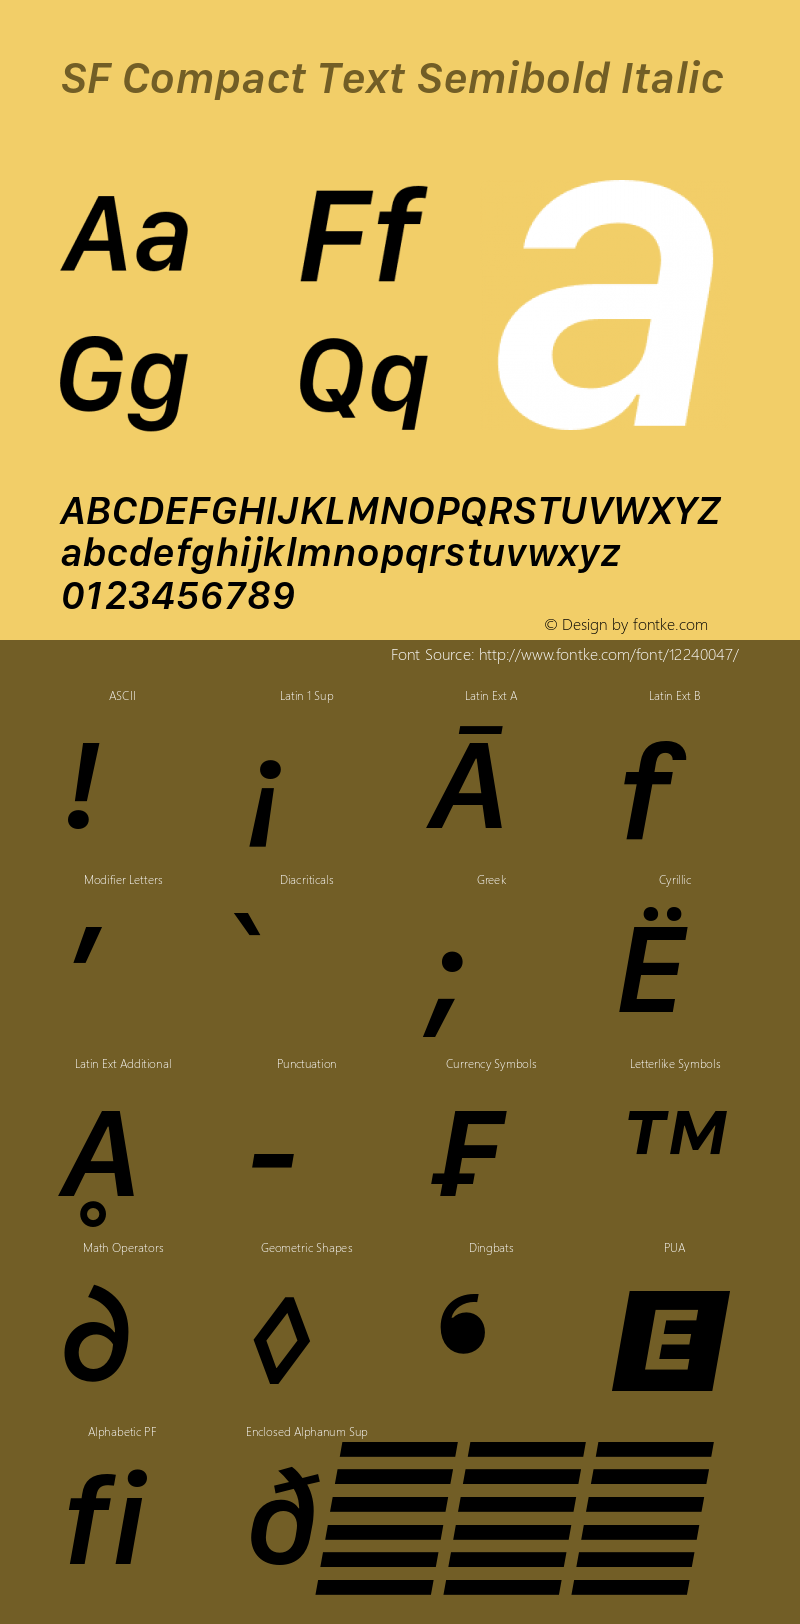 SF Compact Text Semibold Italic 11.0d10e2 Font Sample